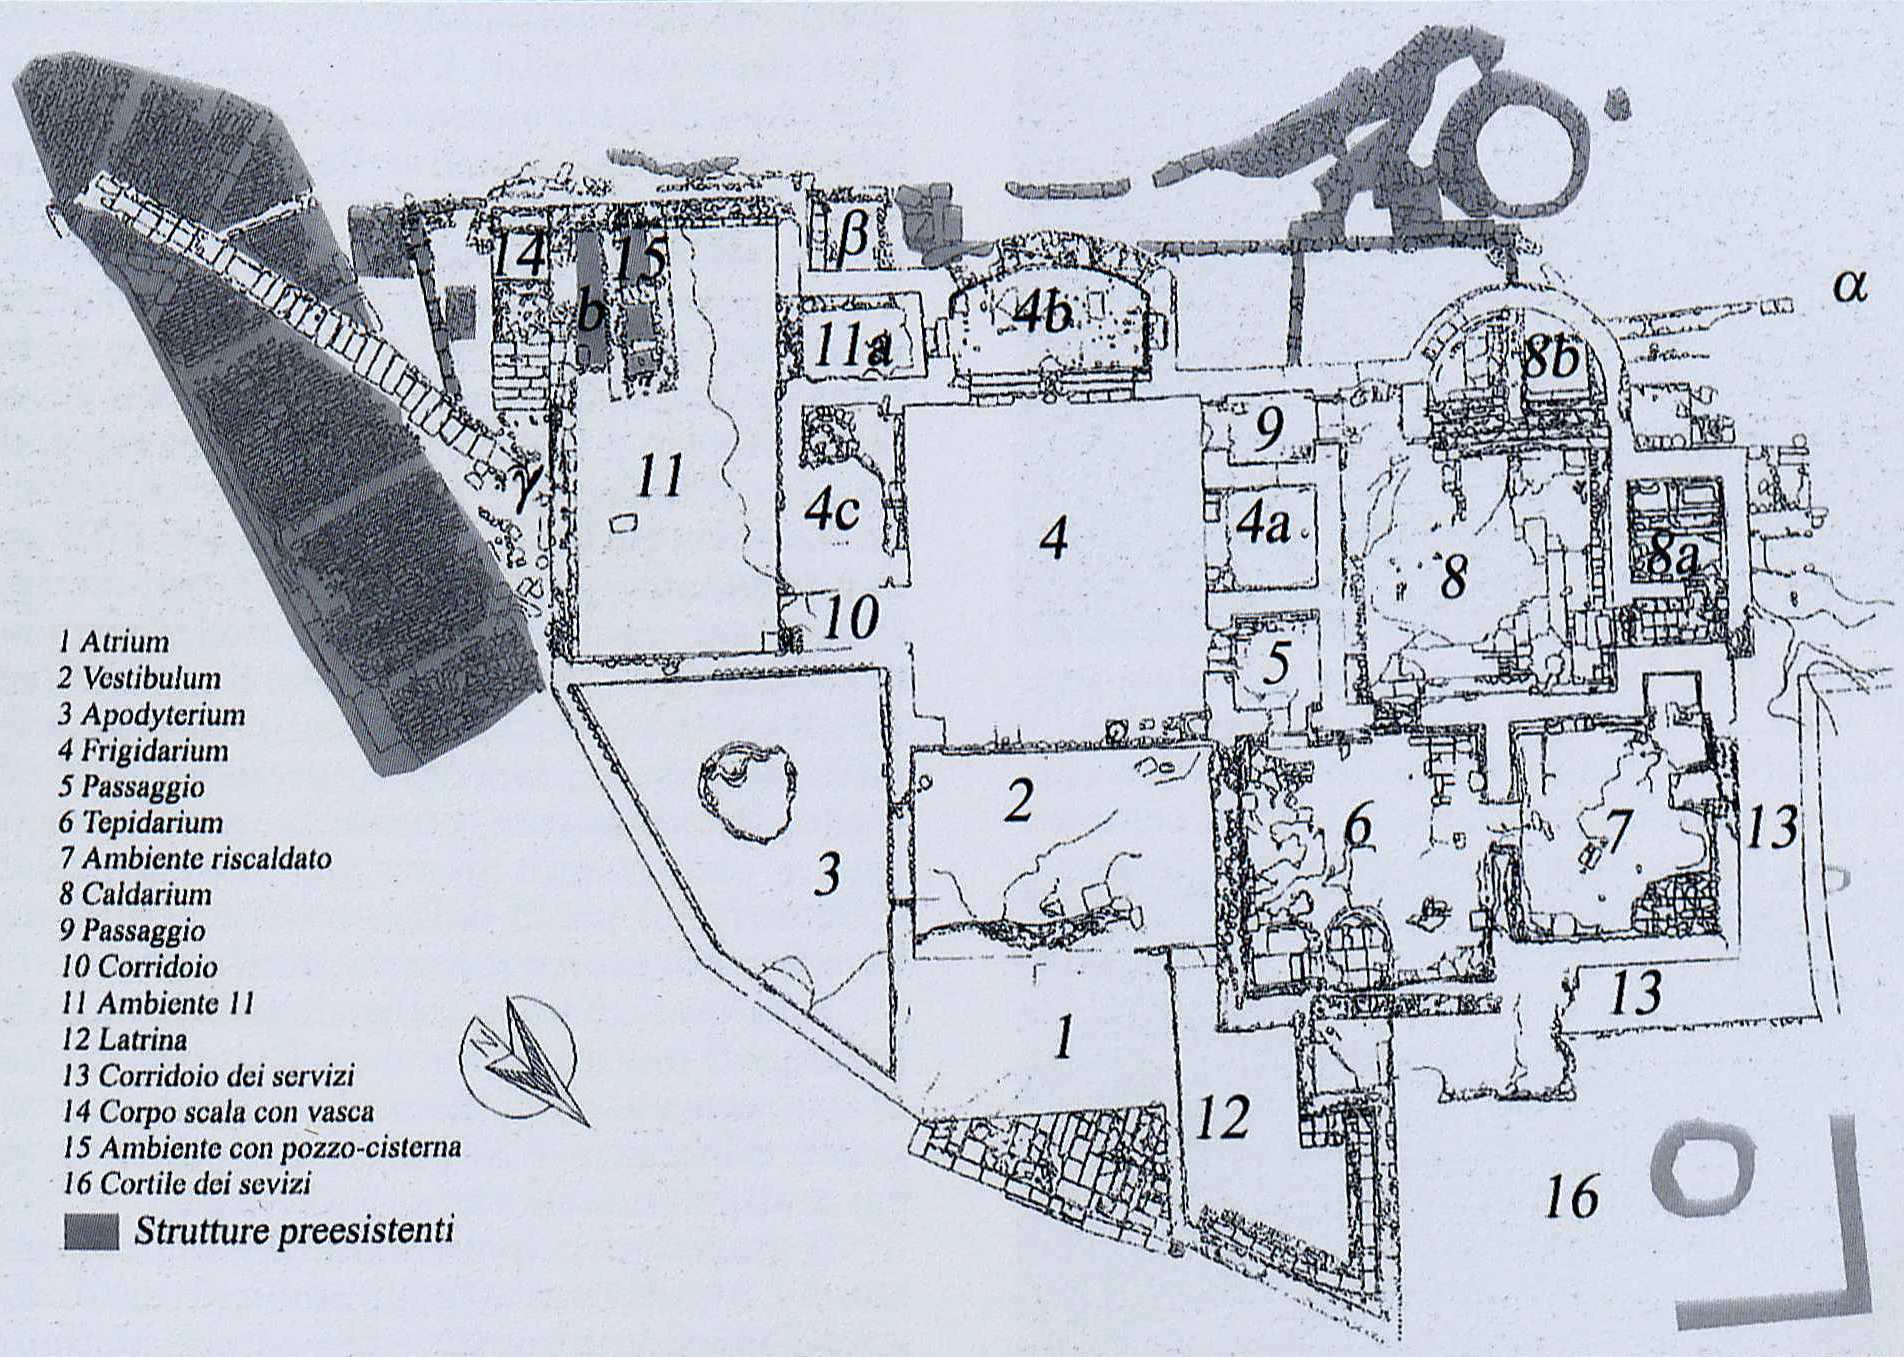 Terme romane, ambiente 13 (terme, luogo ad uso pubblico) - Ascea (SA)  (sec. II d.C)